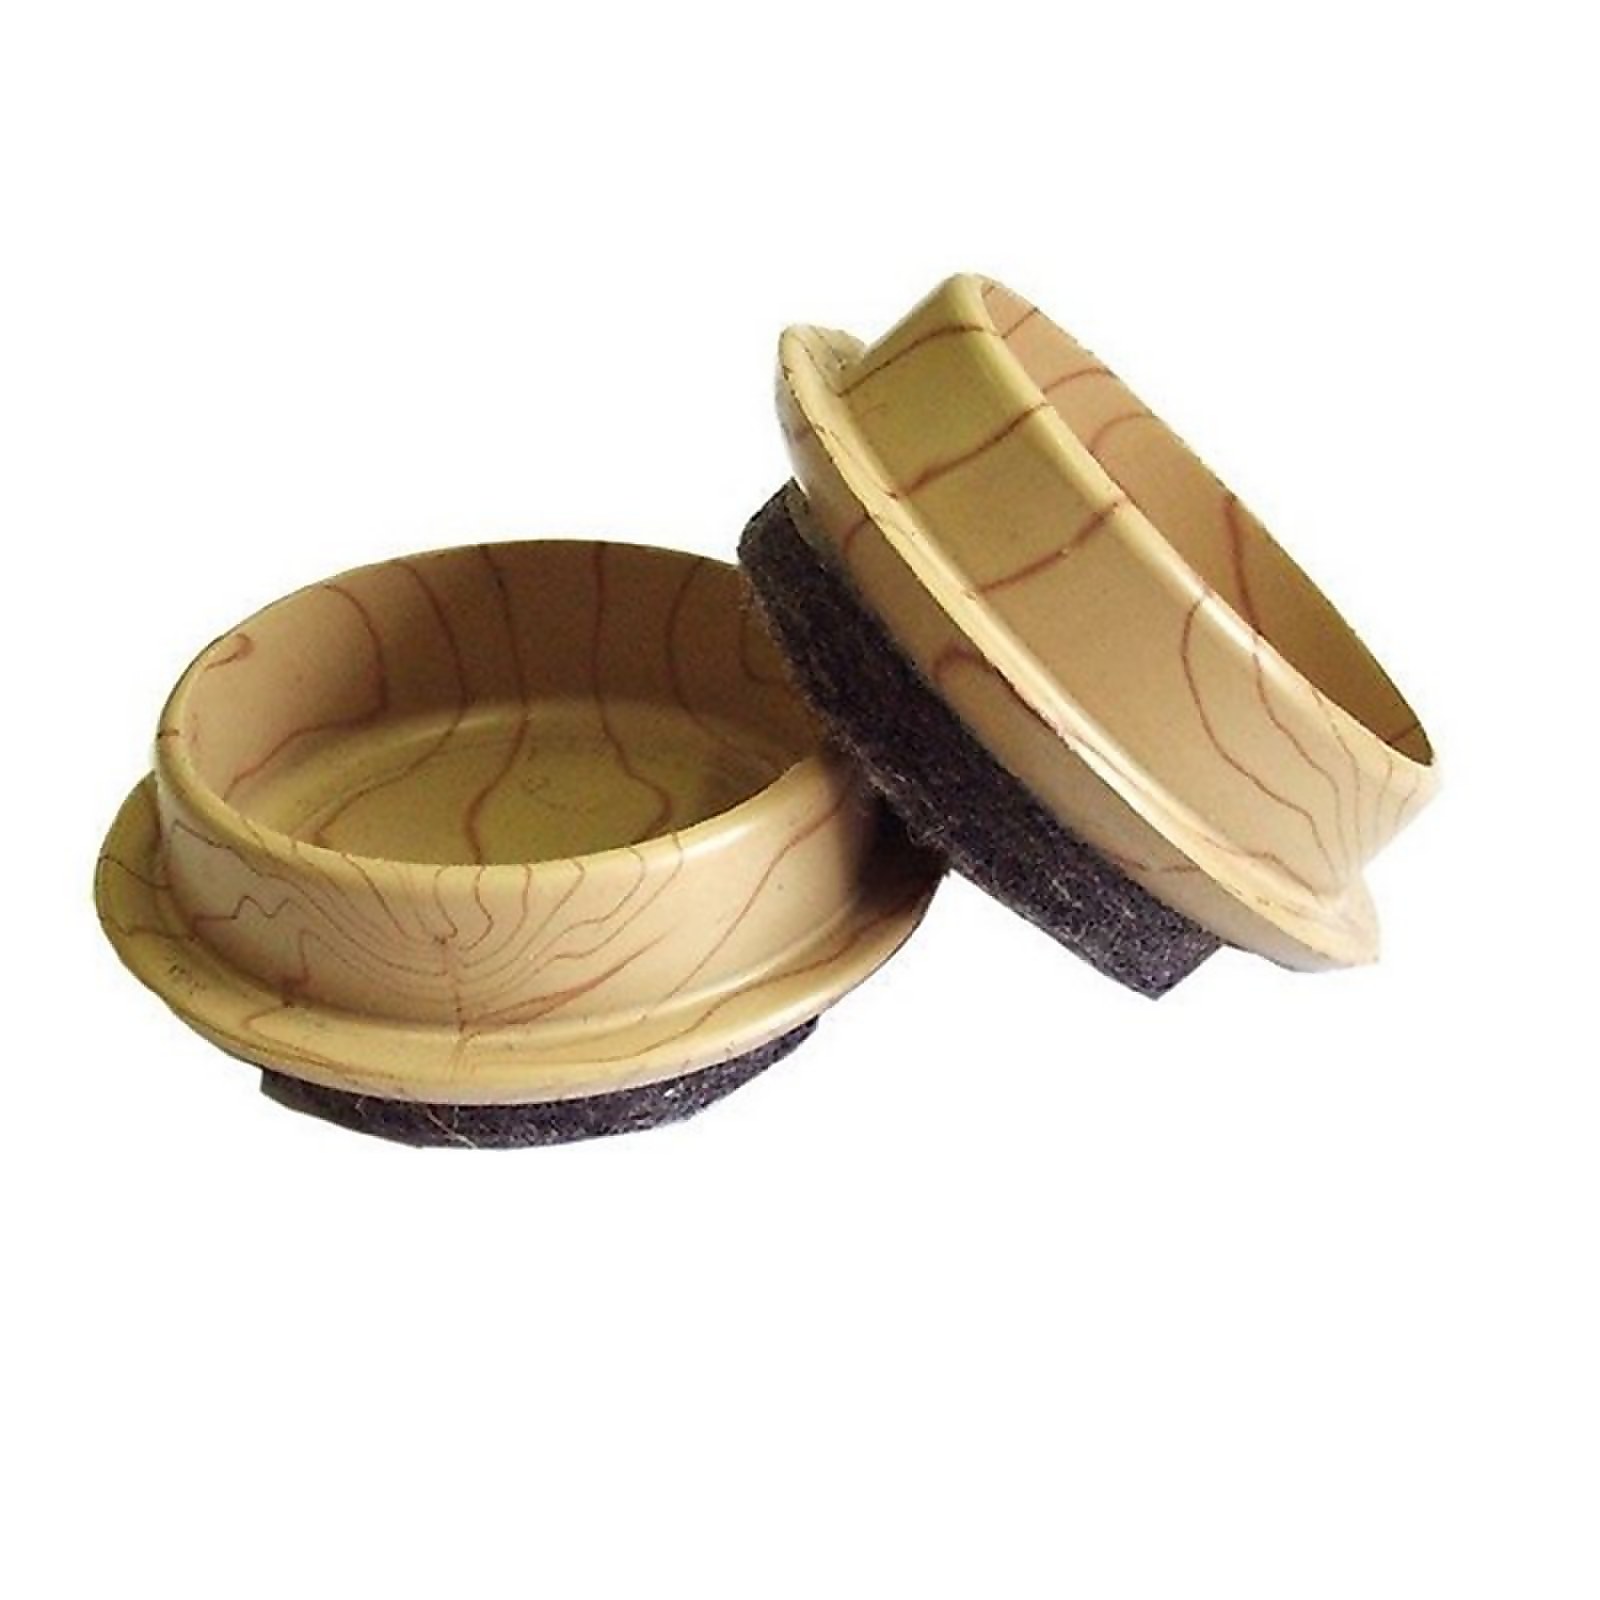 Photo of Castor Cups With Felt Base - Light Wood Grain - 45mm - 4 Pack